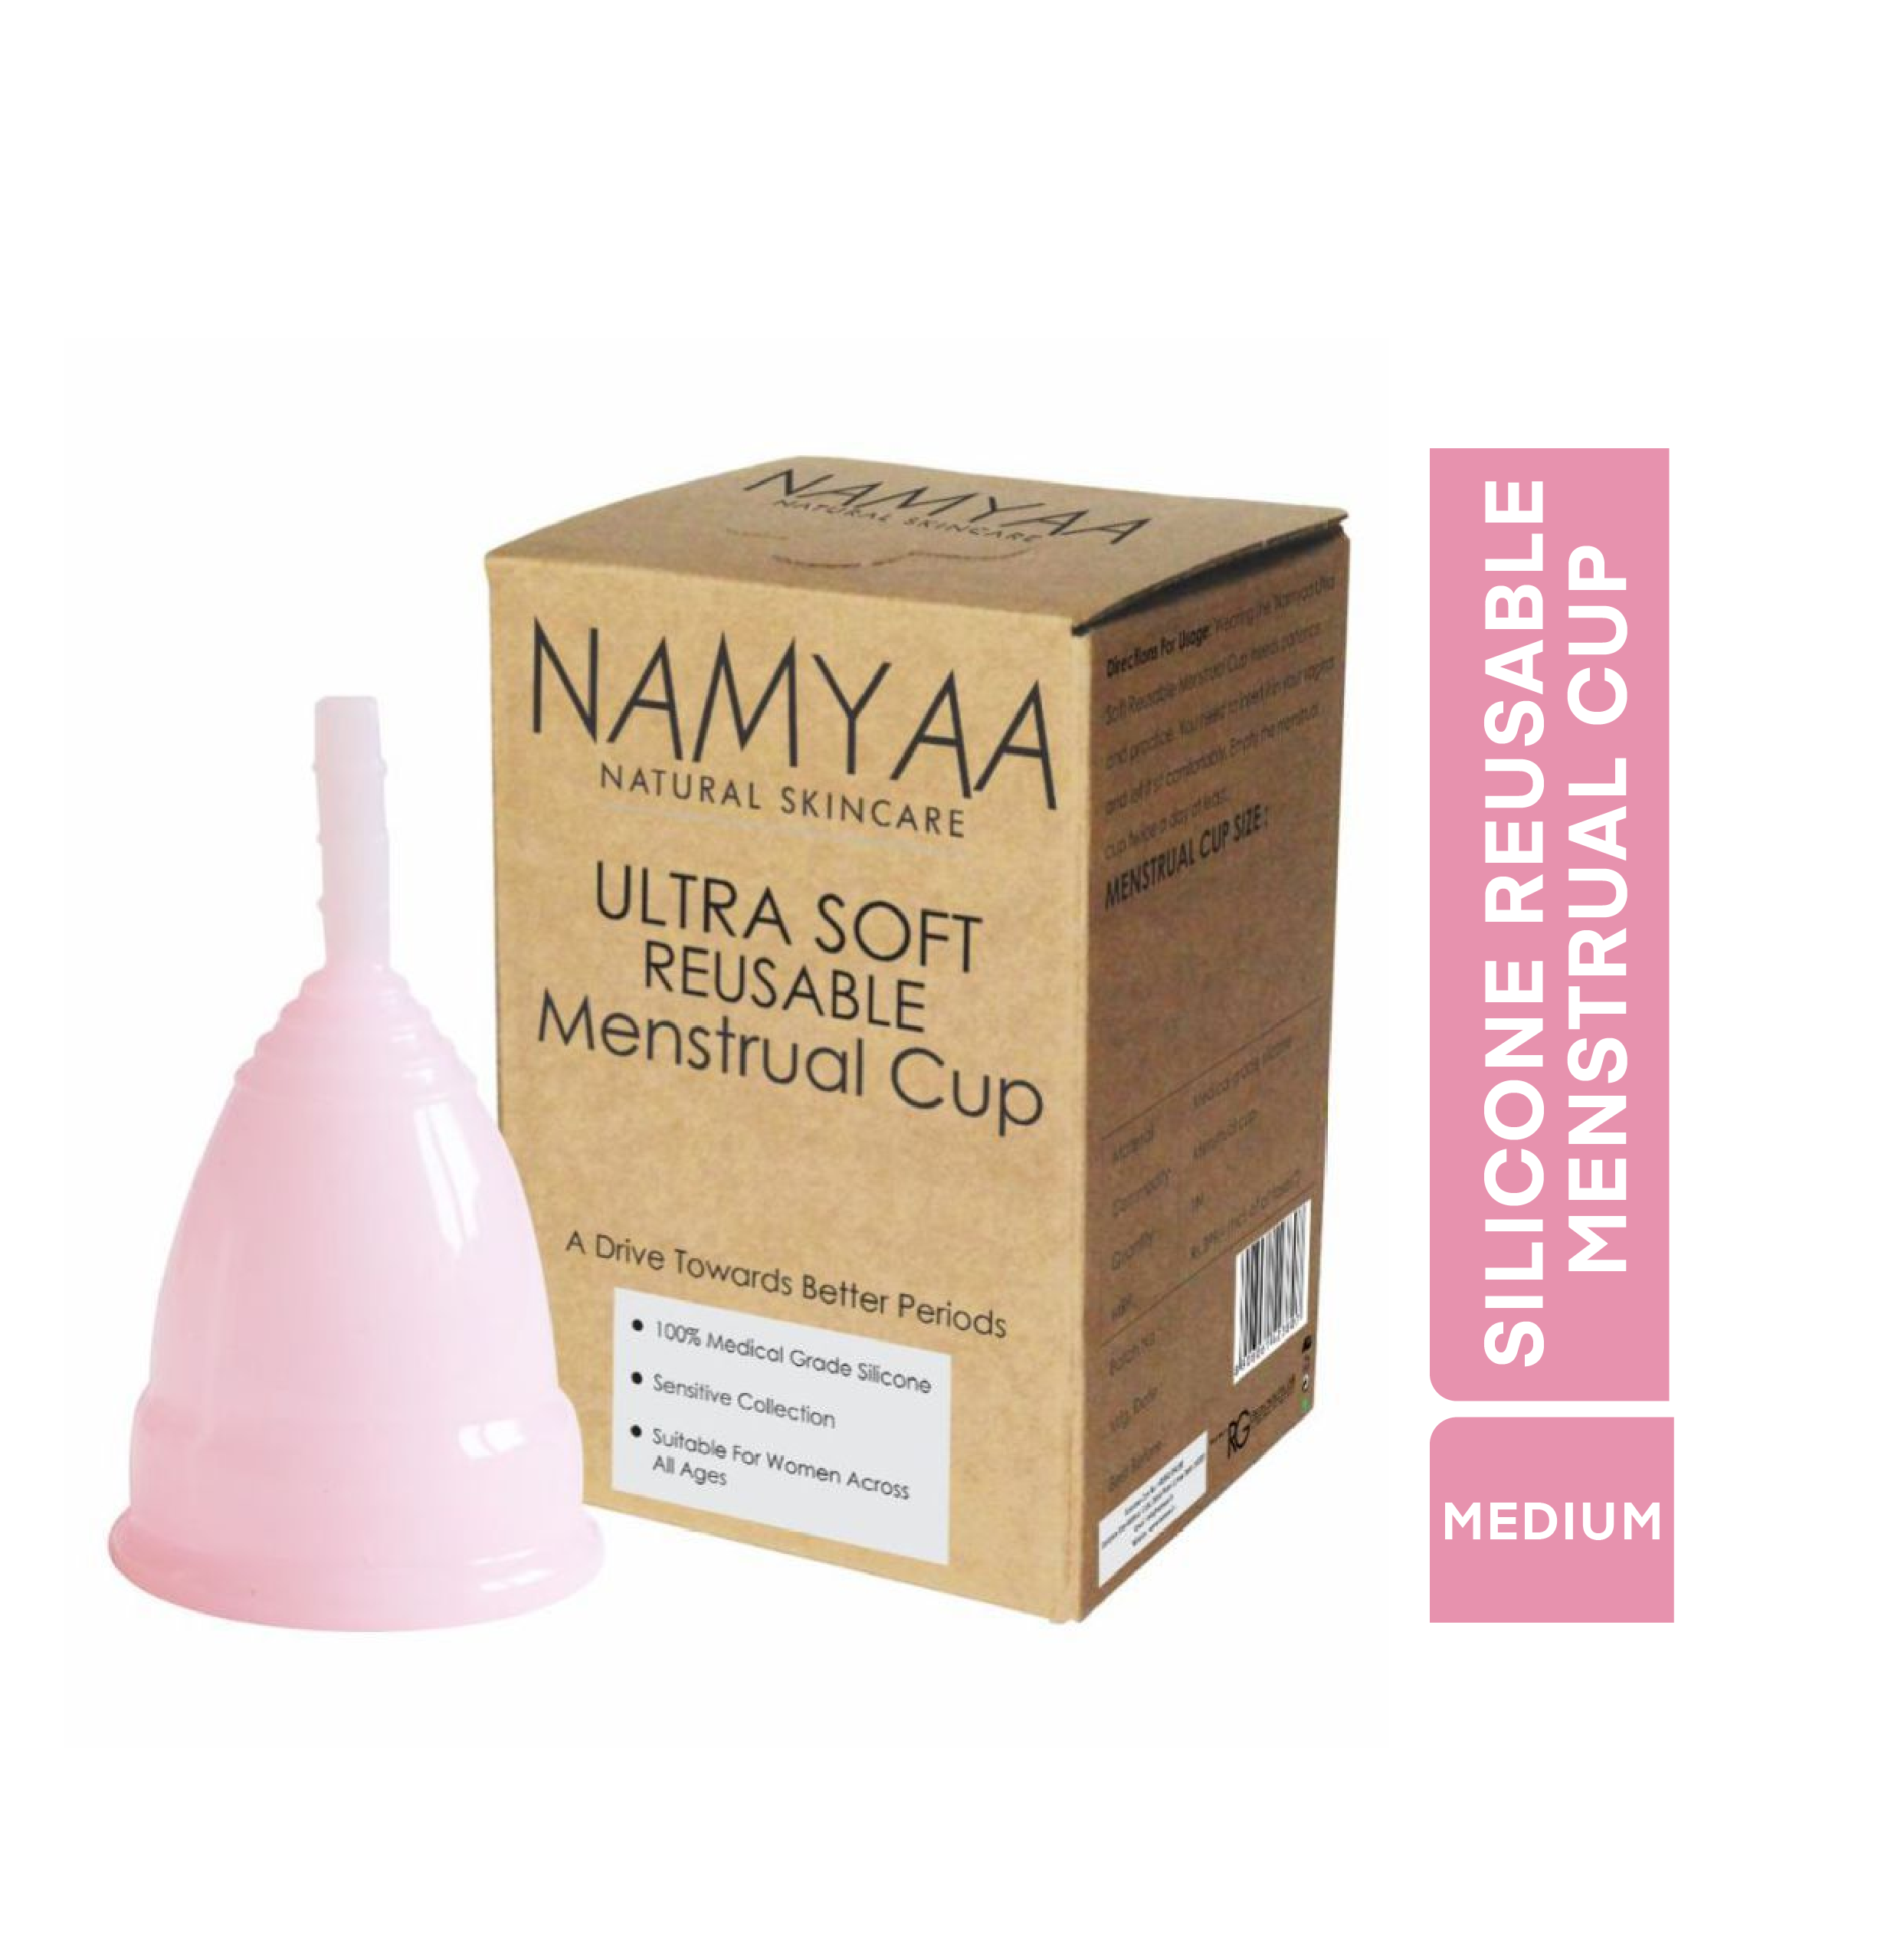 Namyaa Ultra Soft Medium 100% Medical Grade Silicone 1 Reusable Menstrual Cup Medium